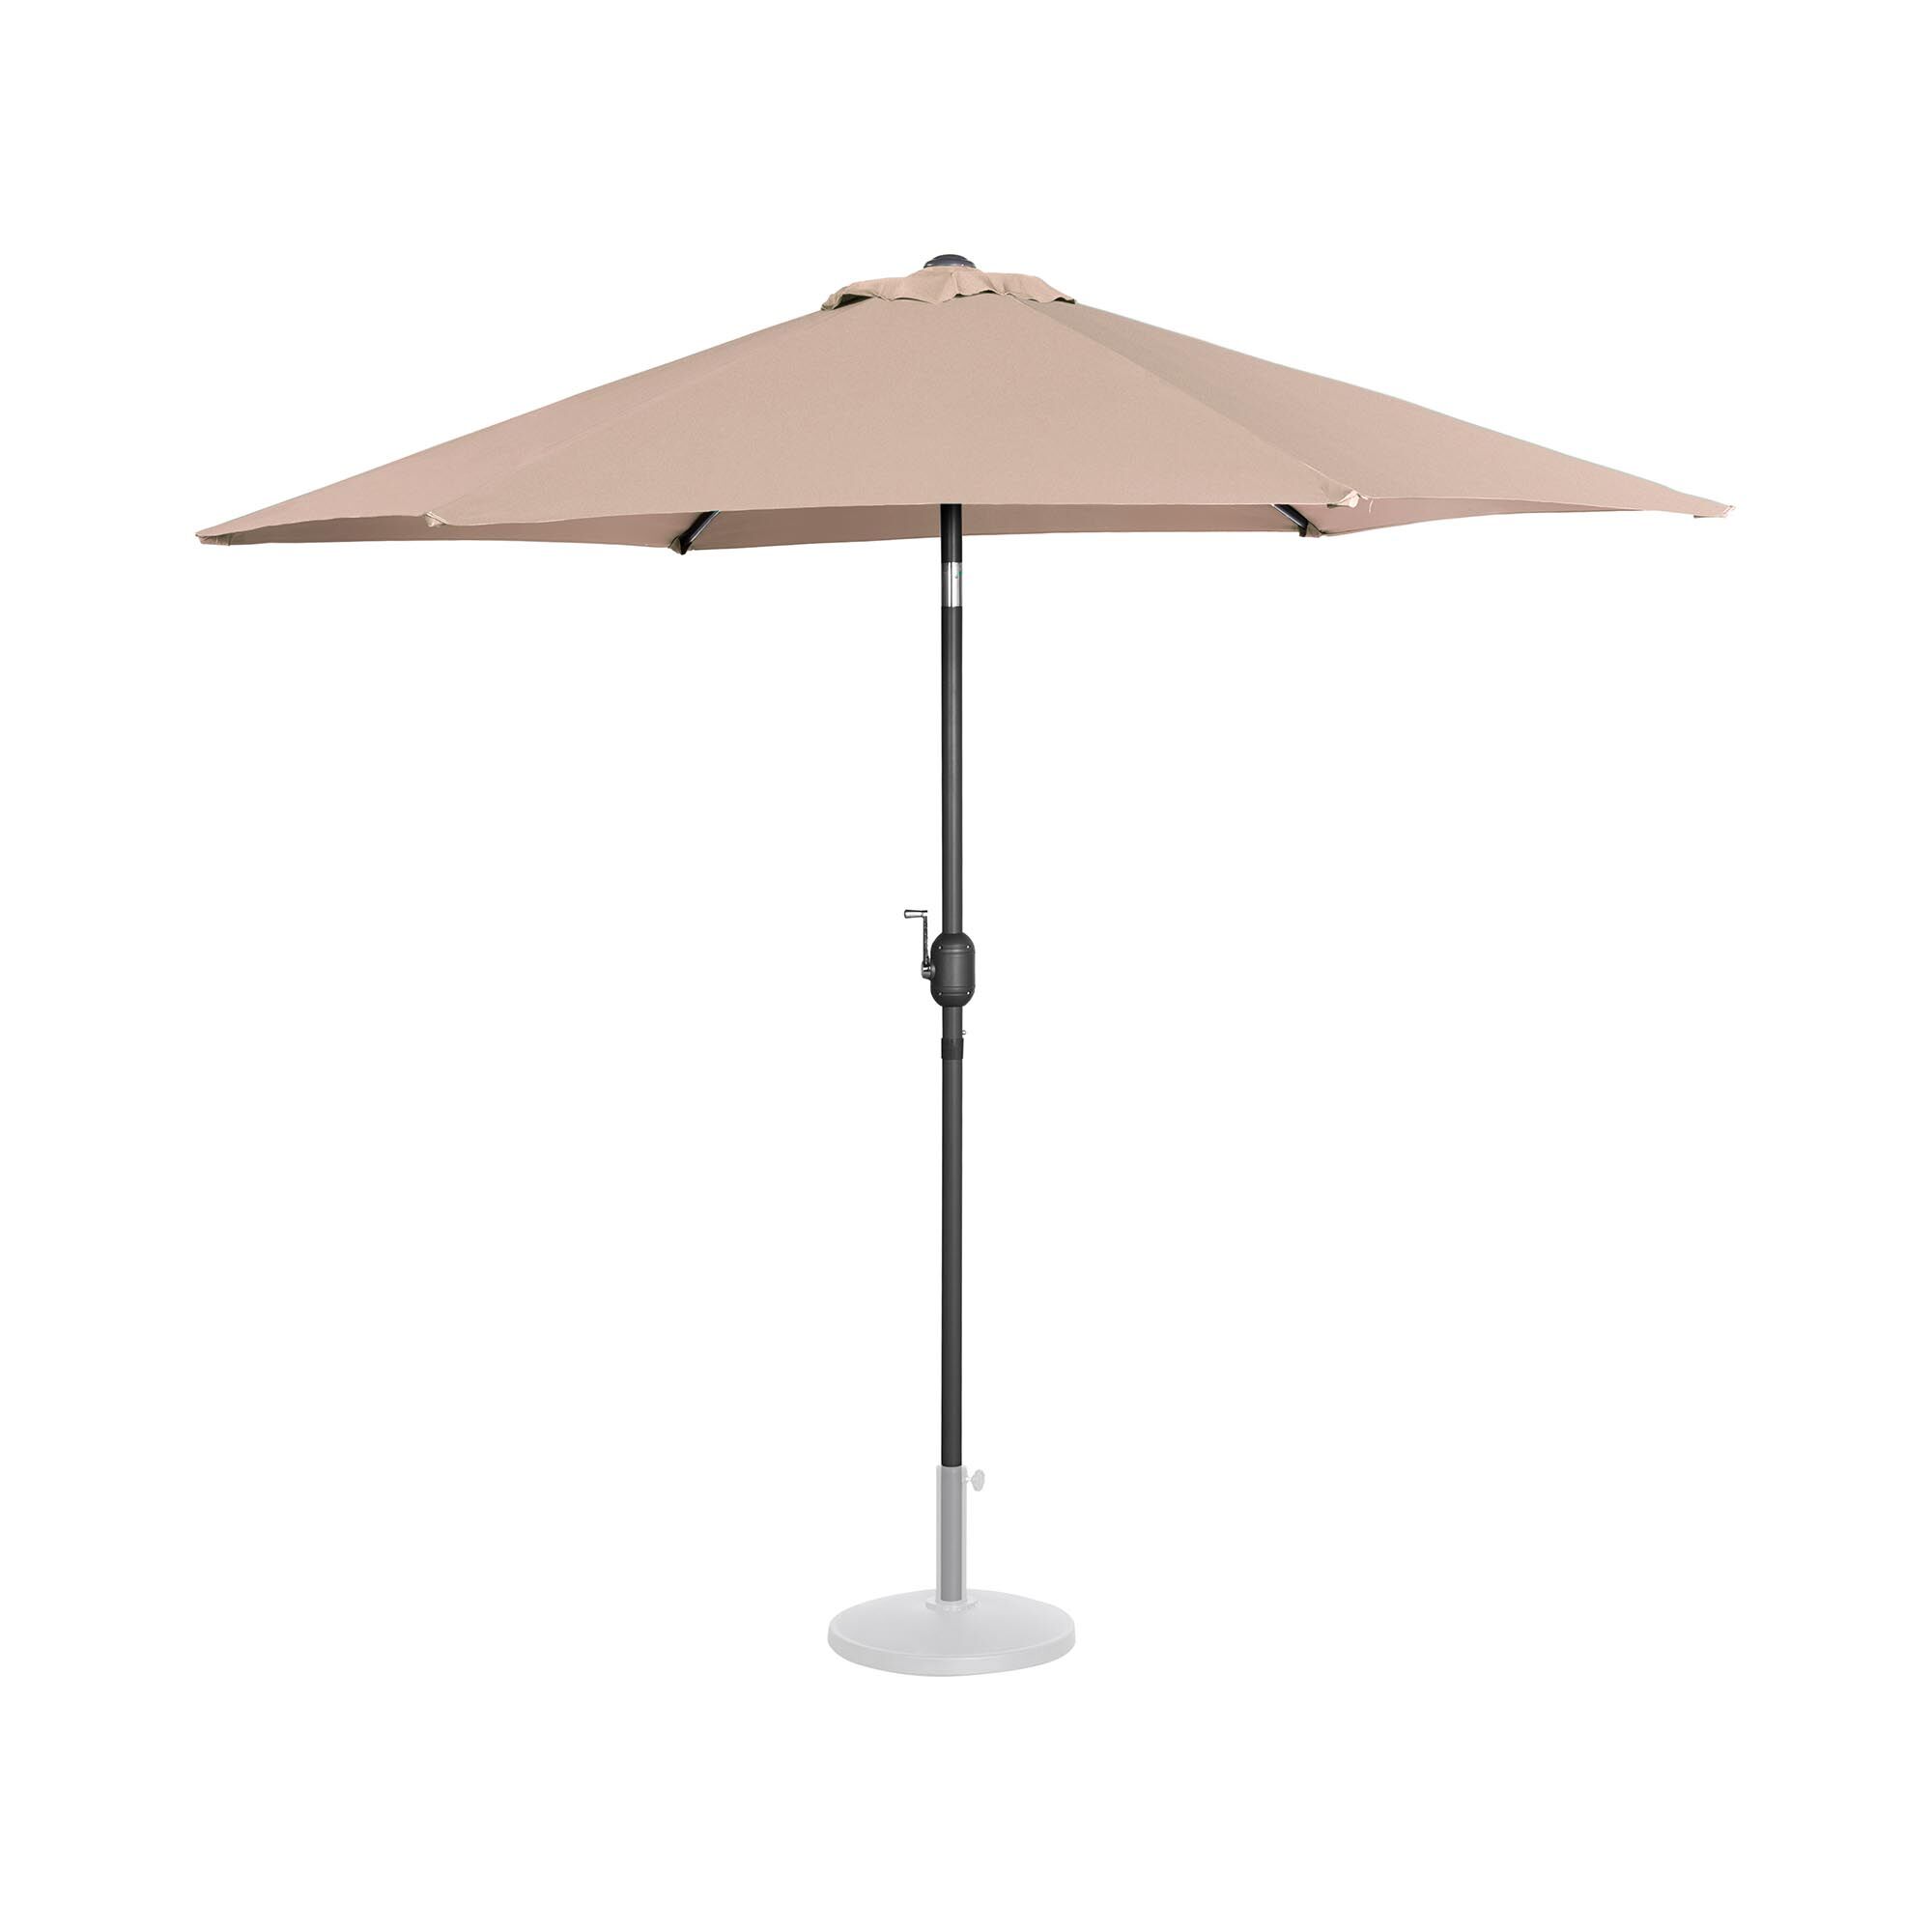 Uniprodo Large Outdoor Umbrella - creme - hexagonal - Ø 270 cm - tiltable UNI_UMBRELLA_R270CR